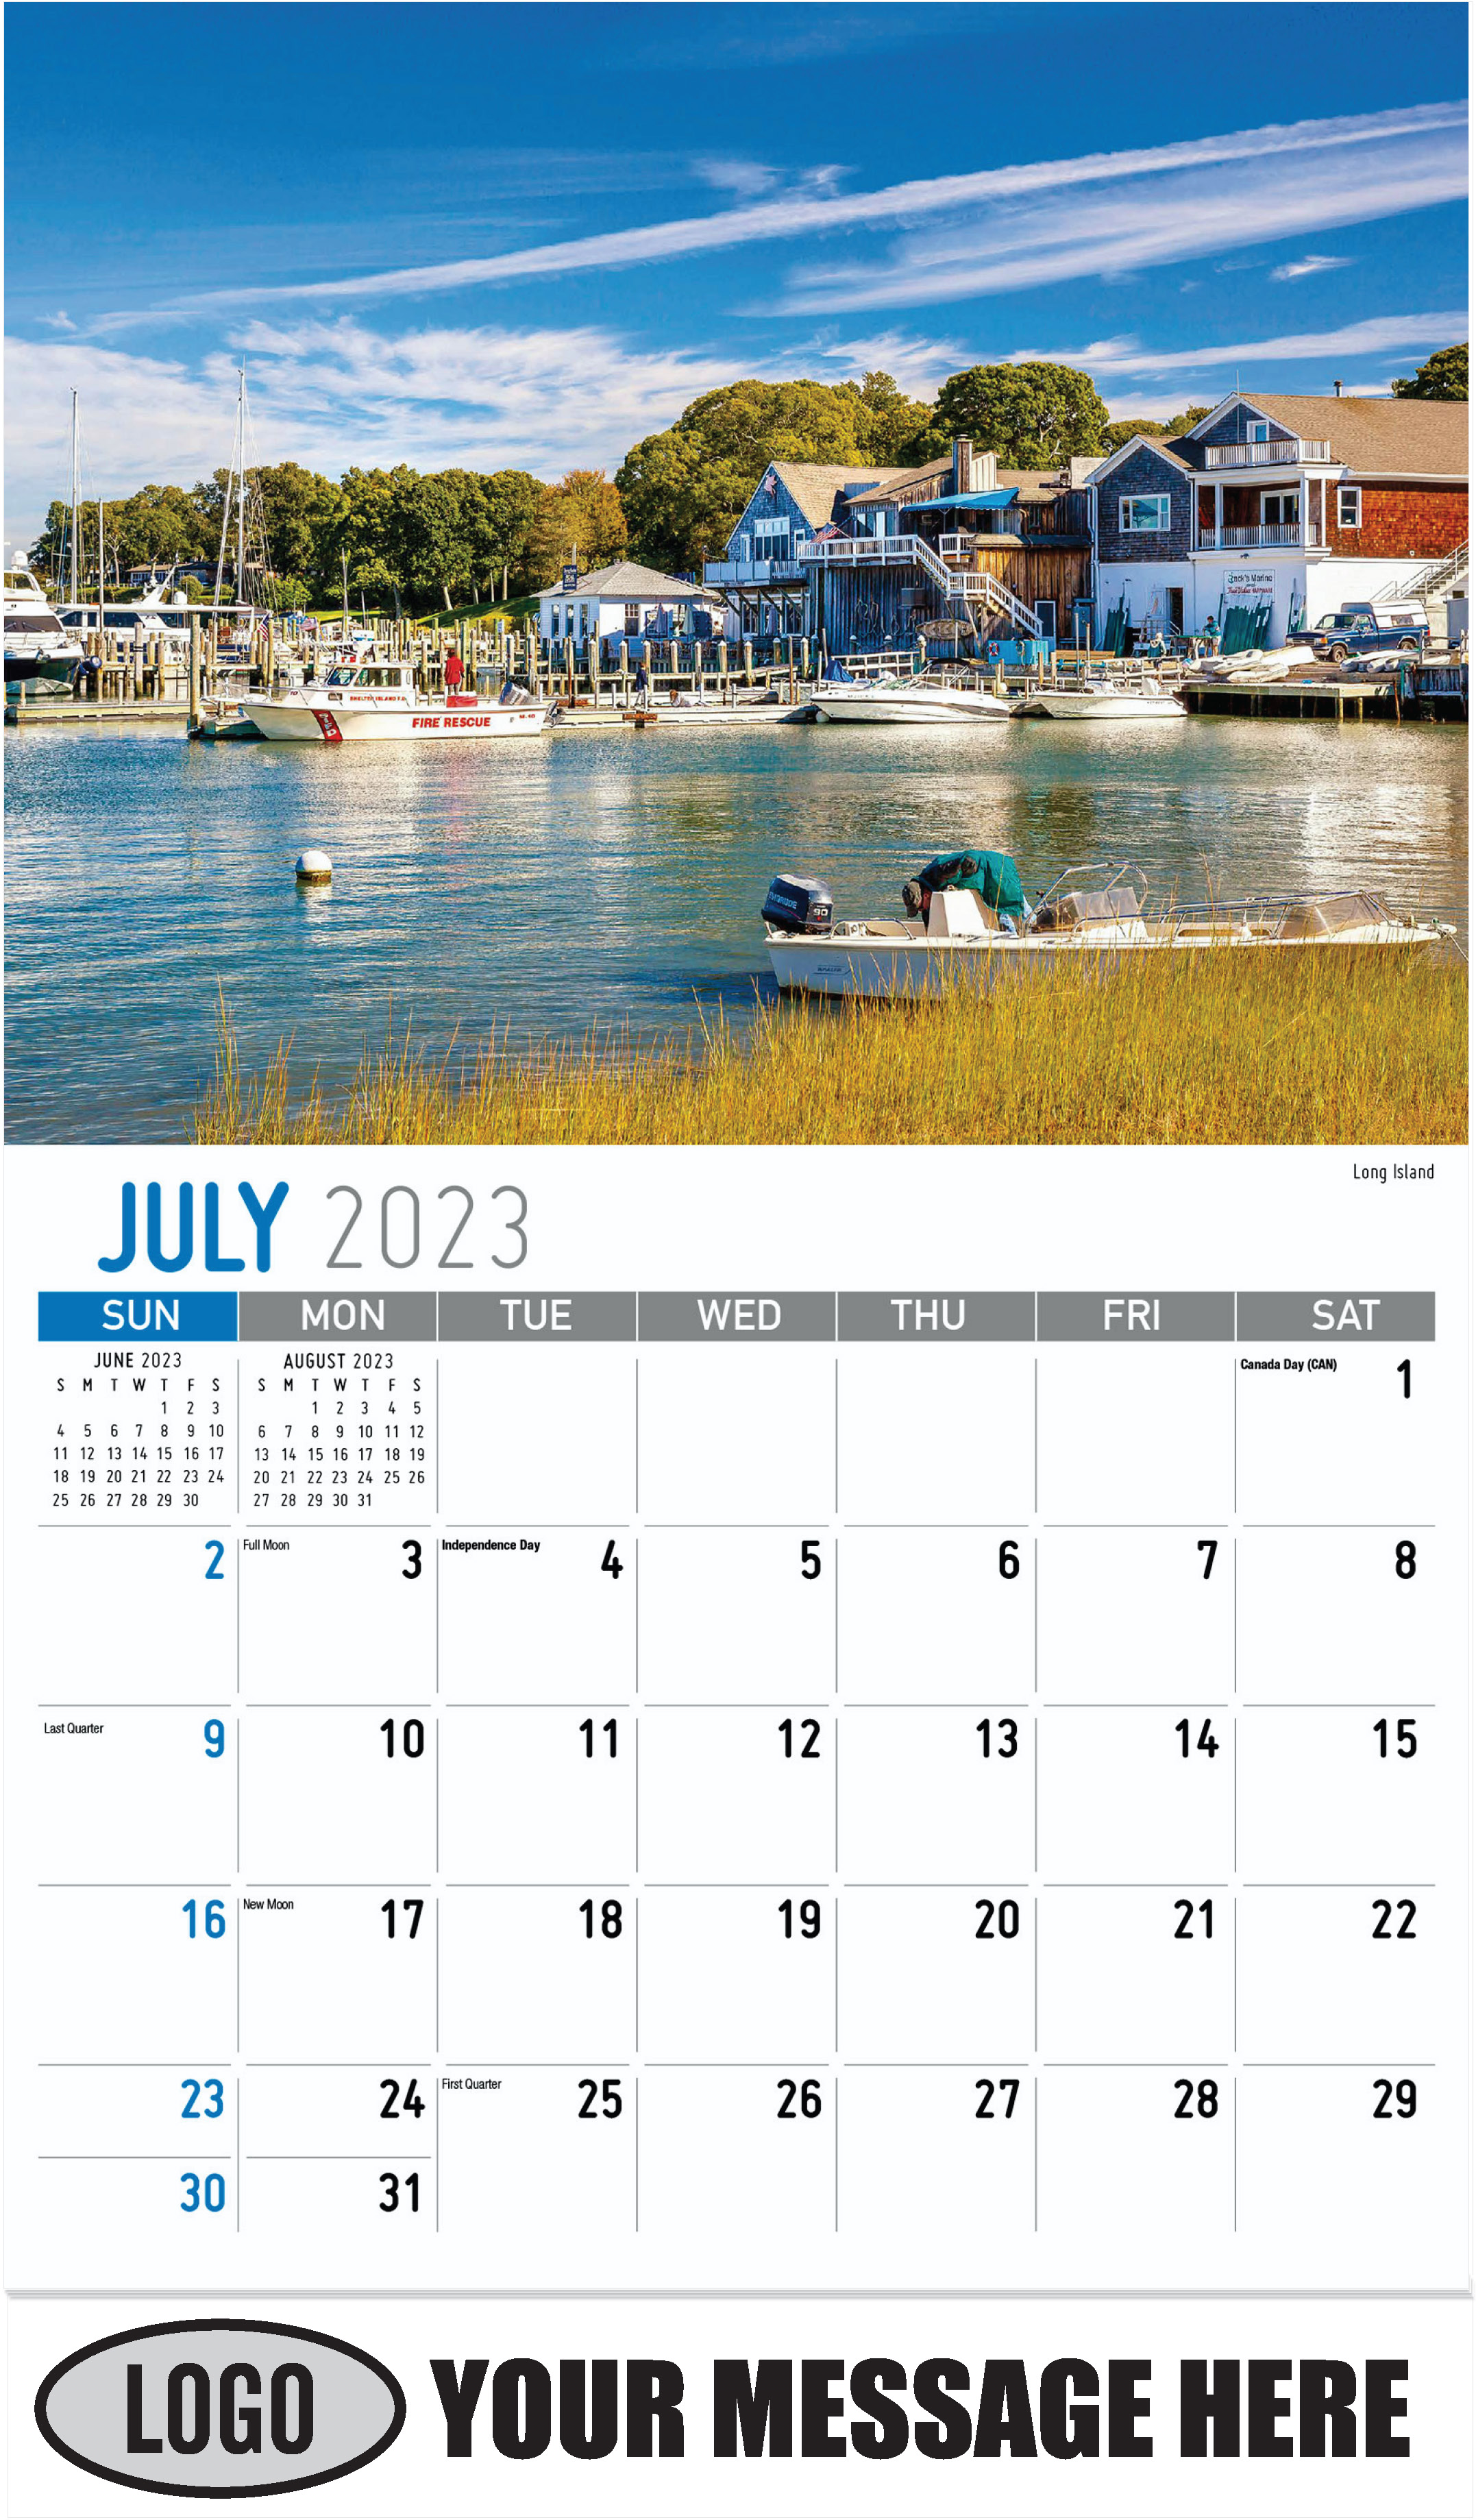 Long Island - July - Scenes of New York 2023 Promotional Calendar